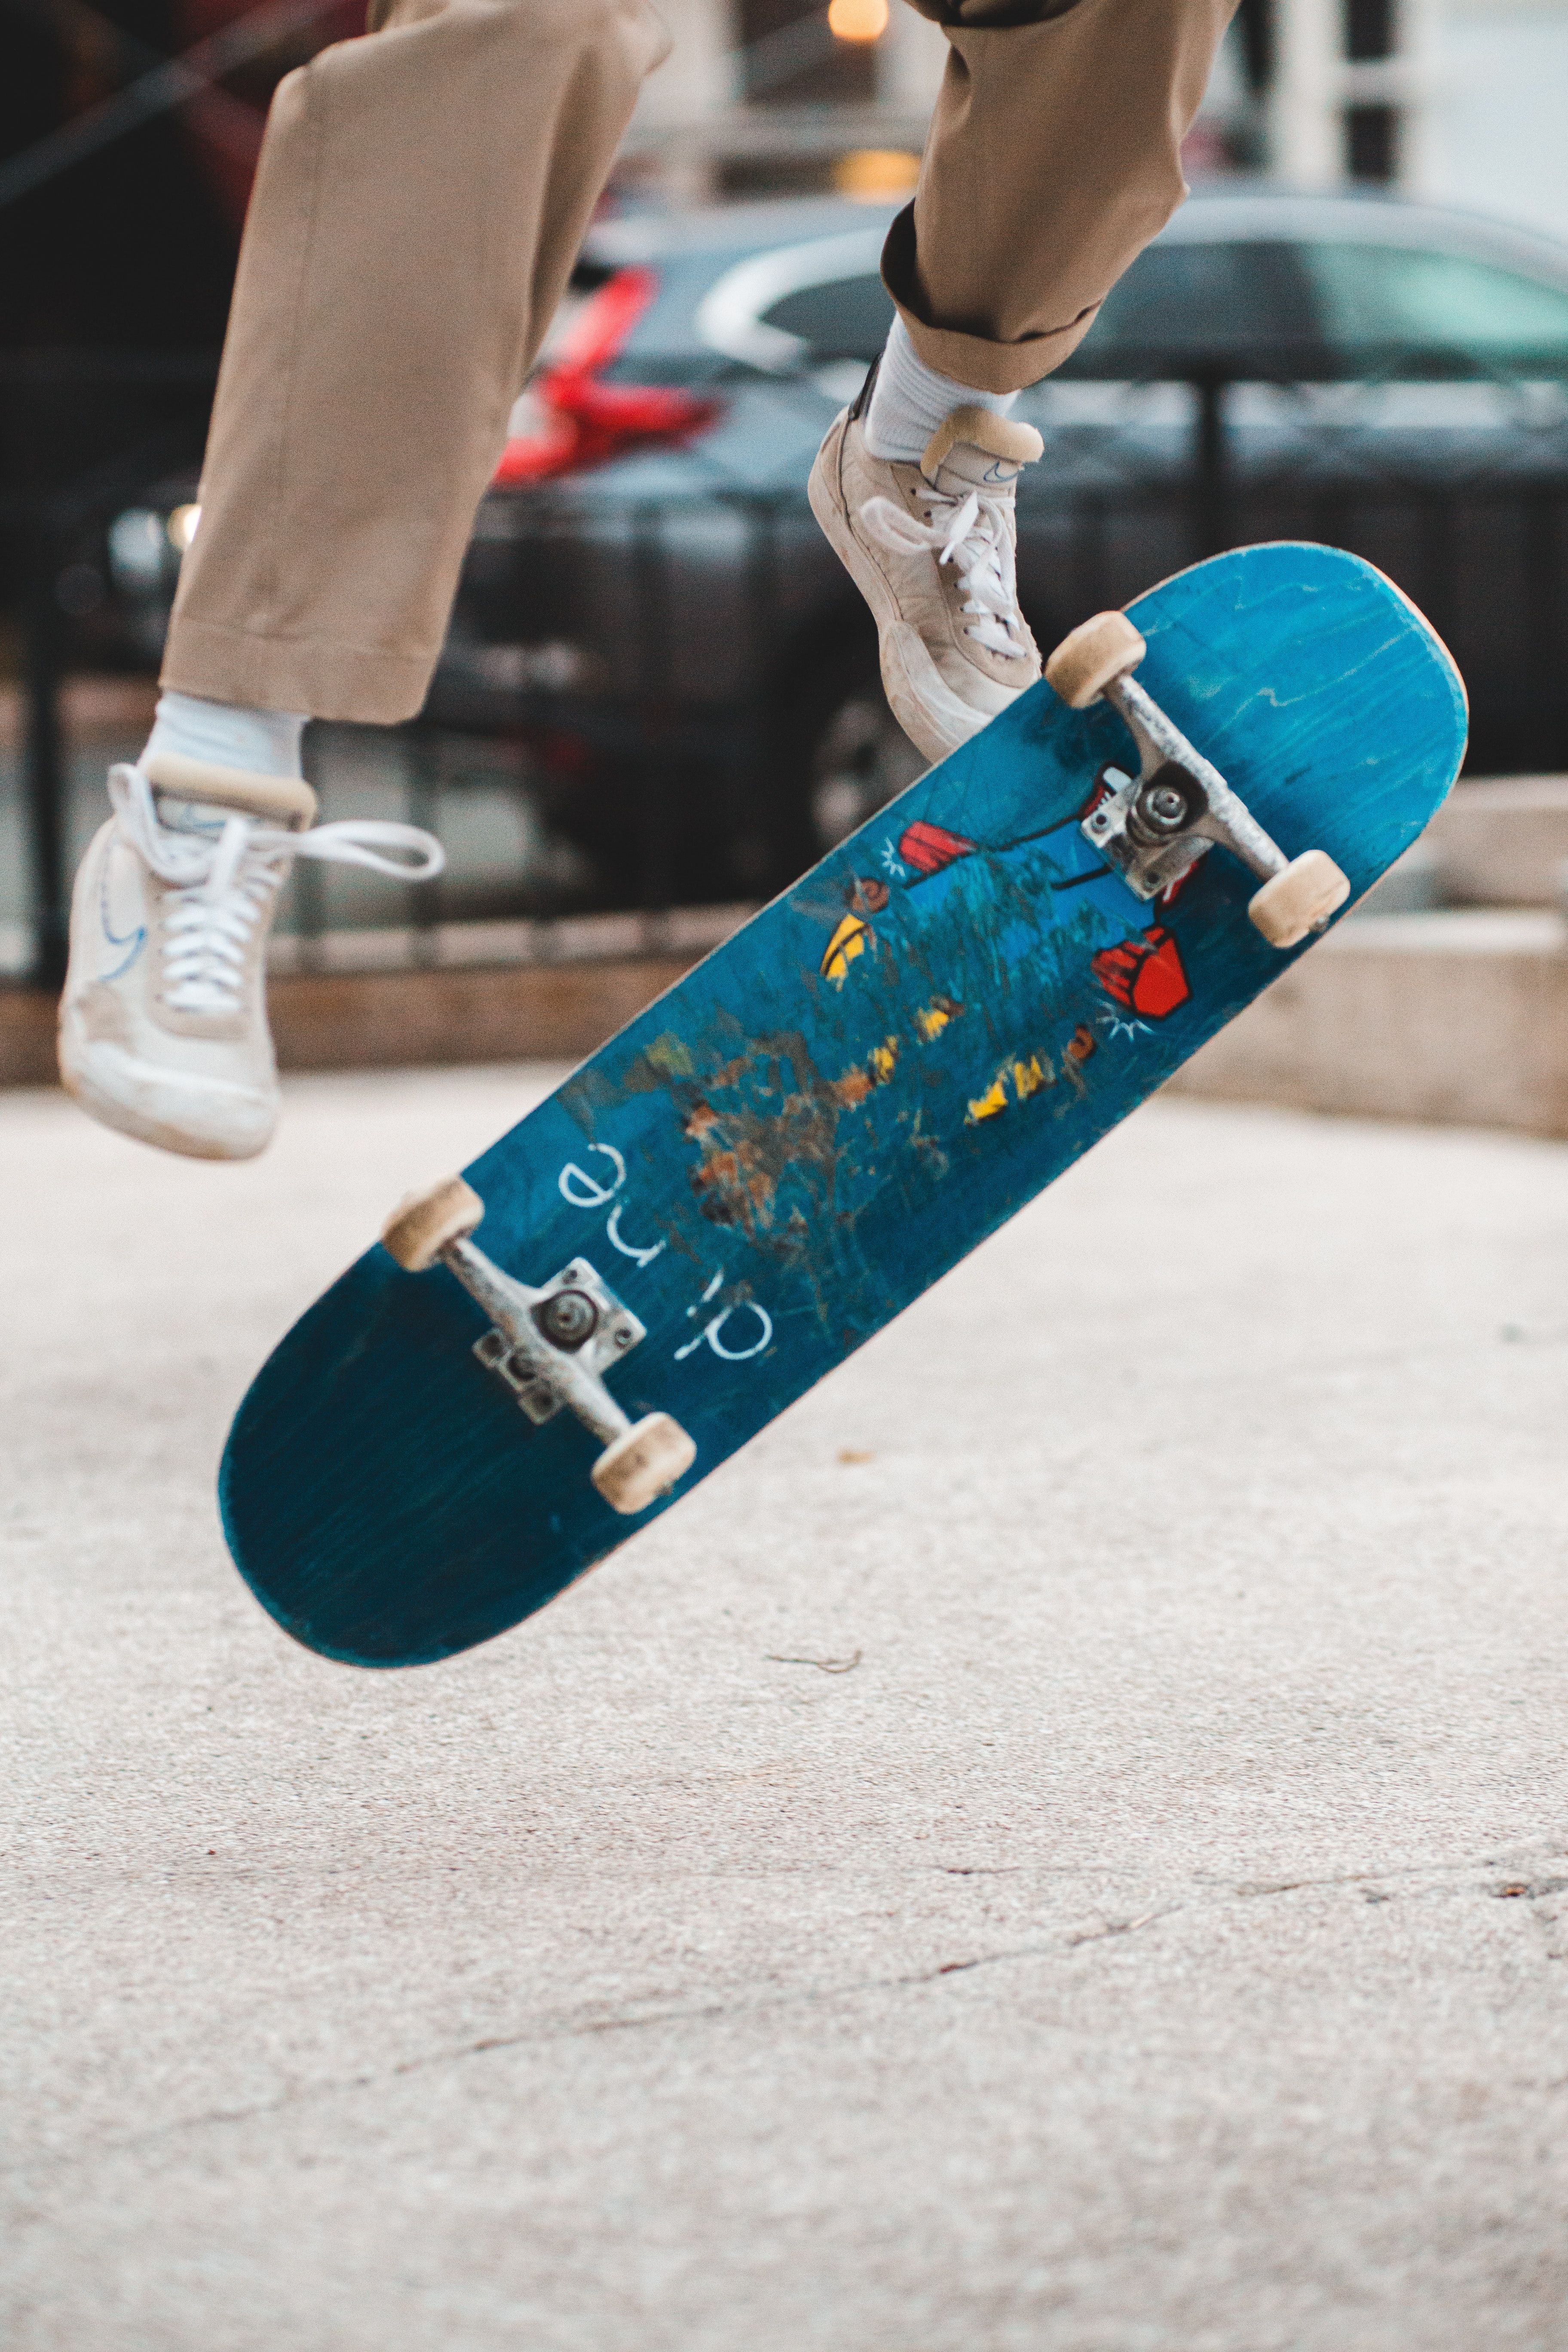 Cool black teenager doing skateboard trick · Free